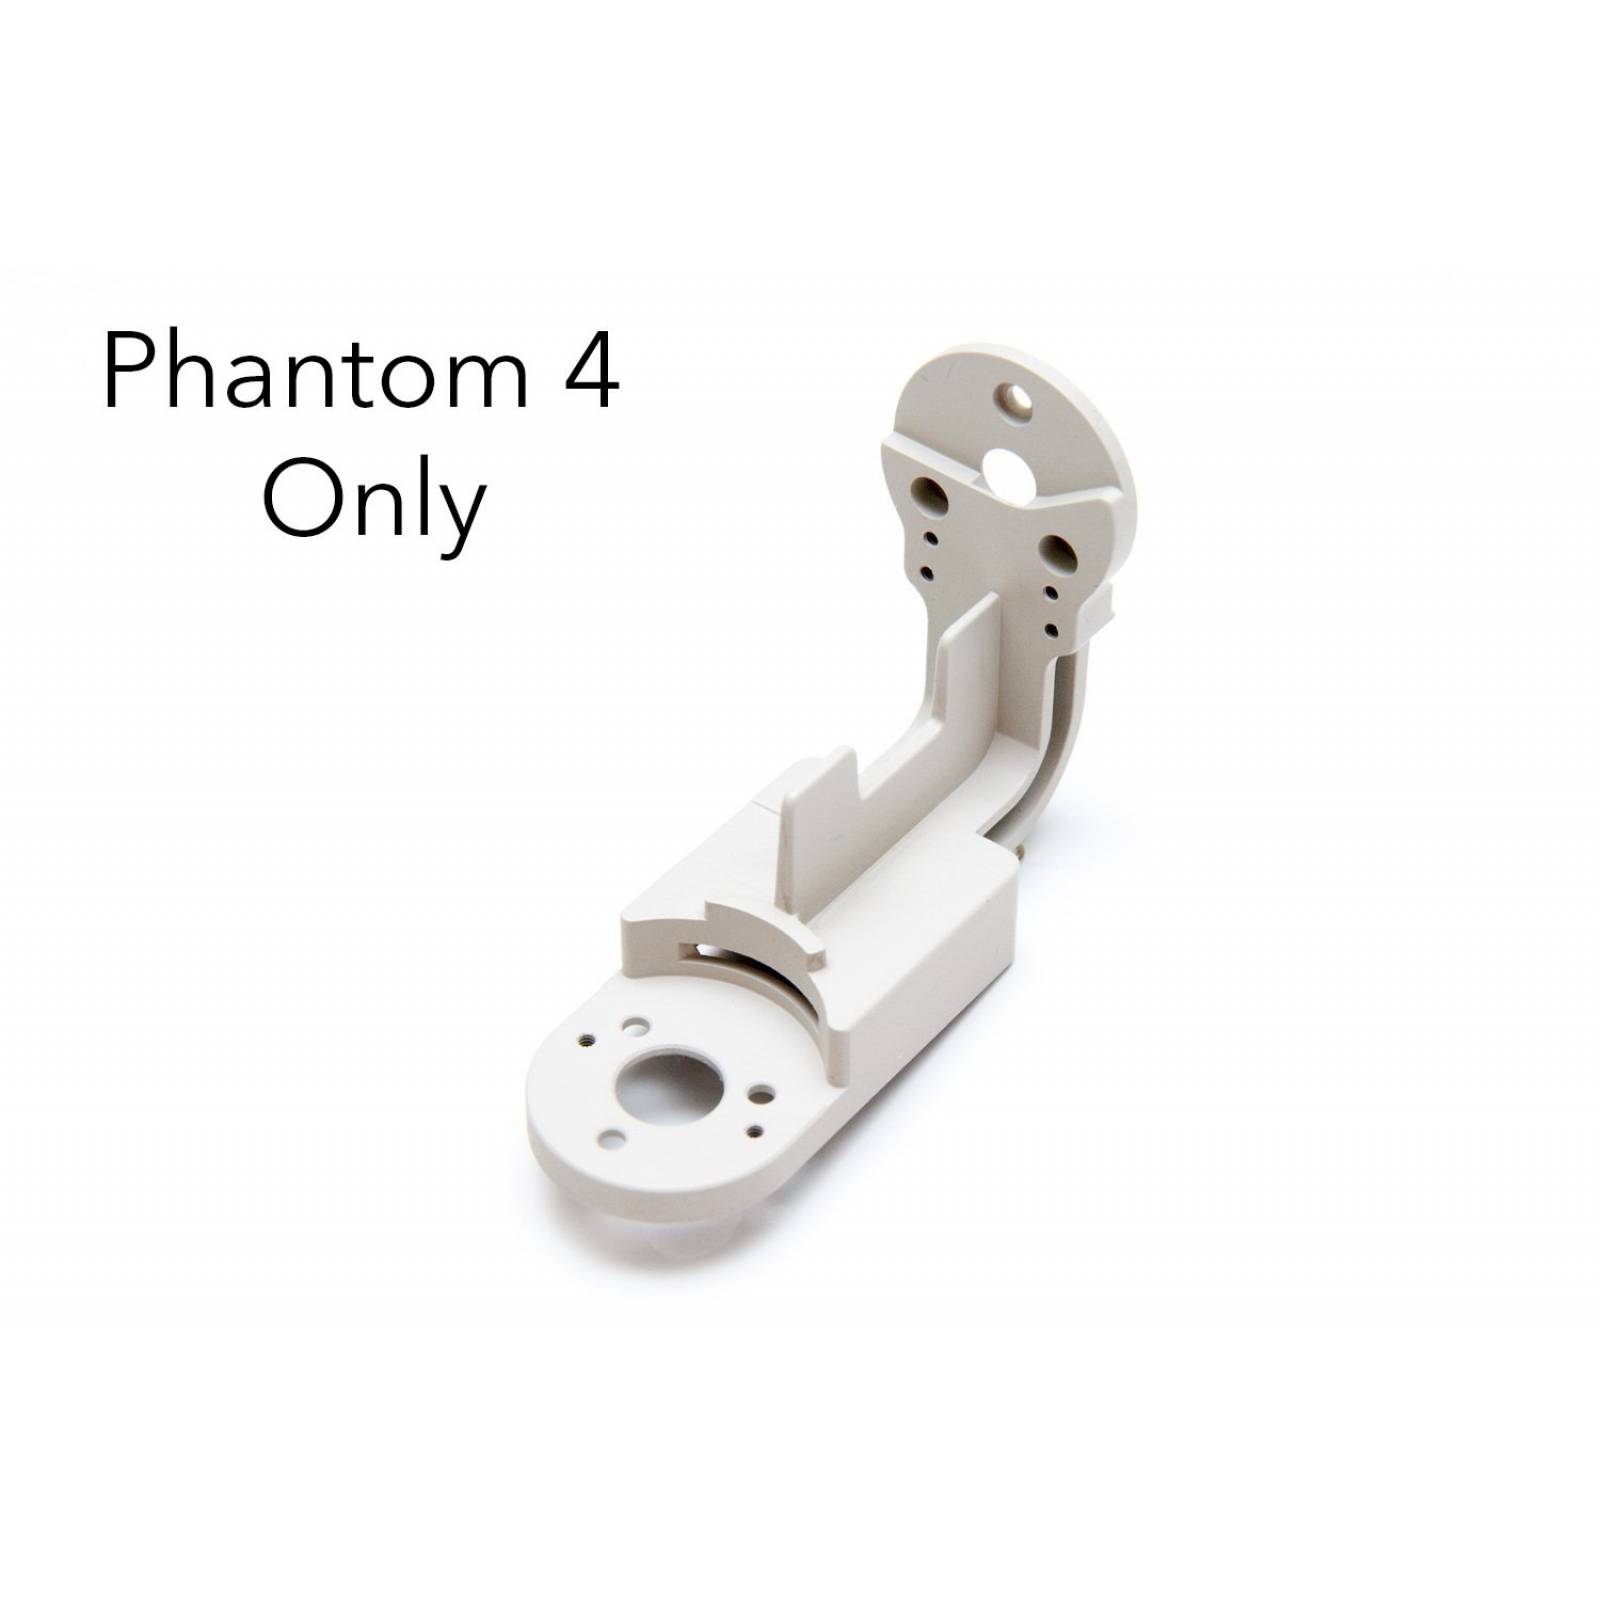 B:DJI Phantom 4 cardán desvío brazo aluminio CNC repuestos